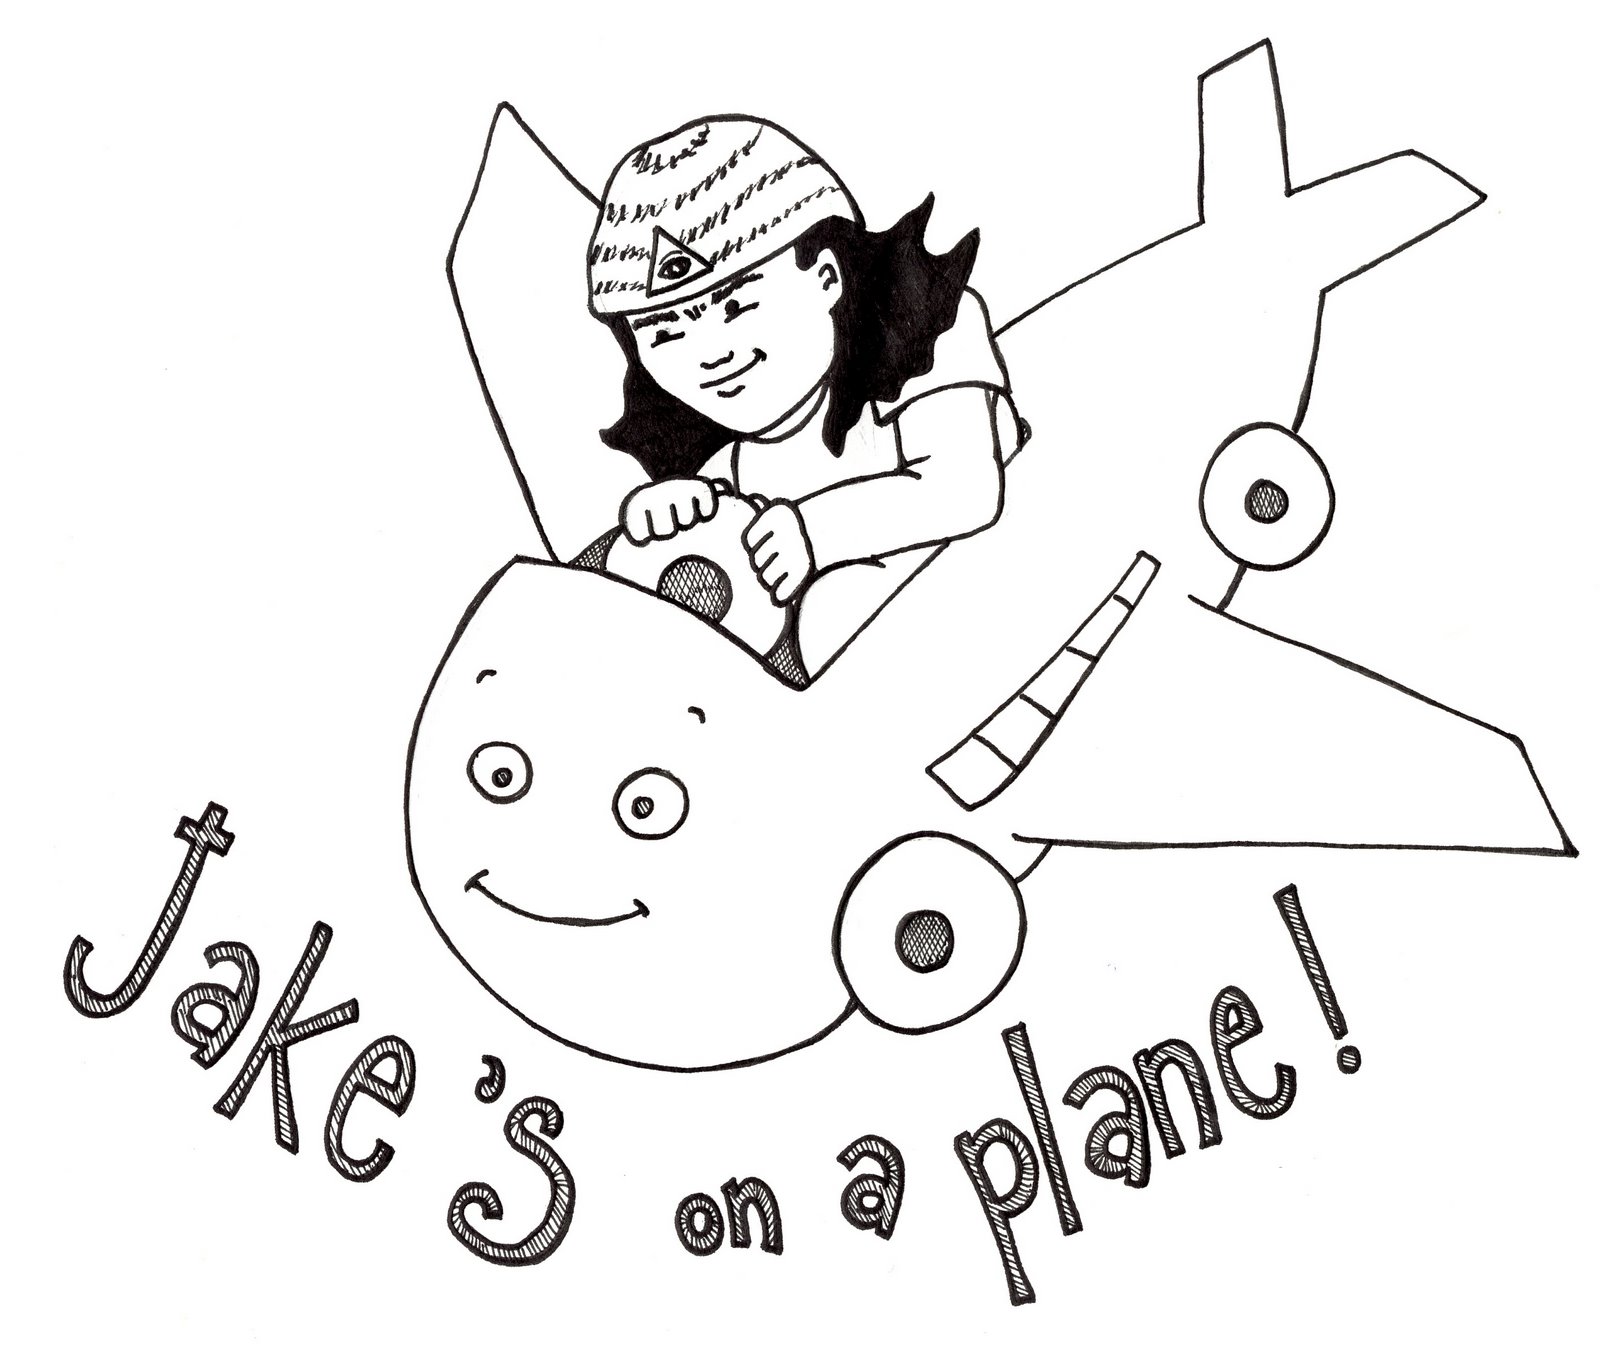 [Jakes+on+a+plane.jpg]